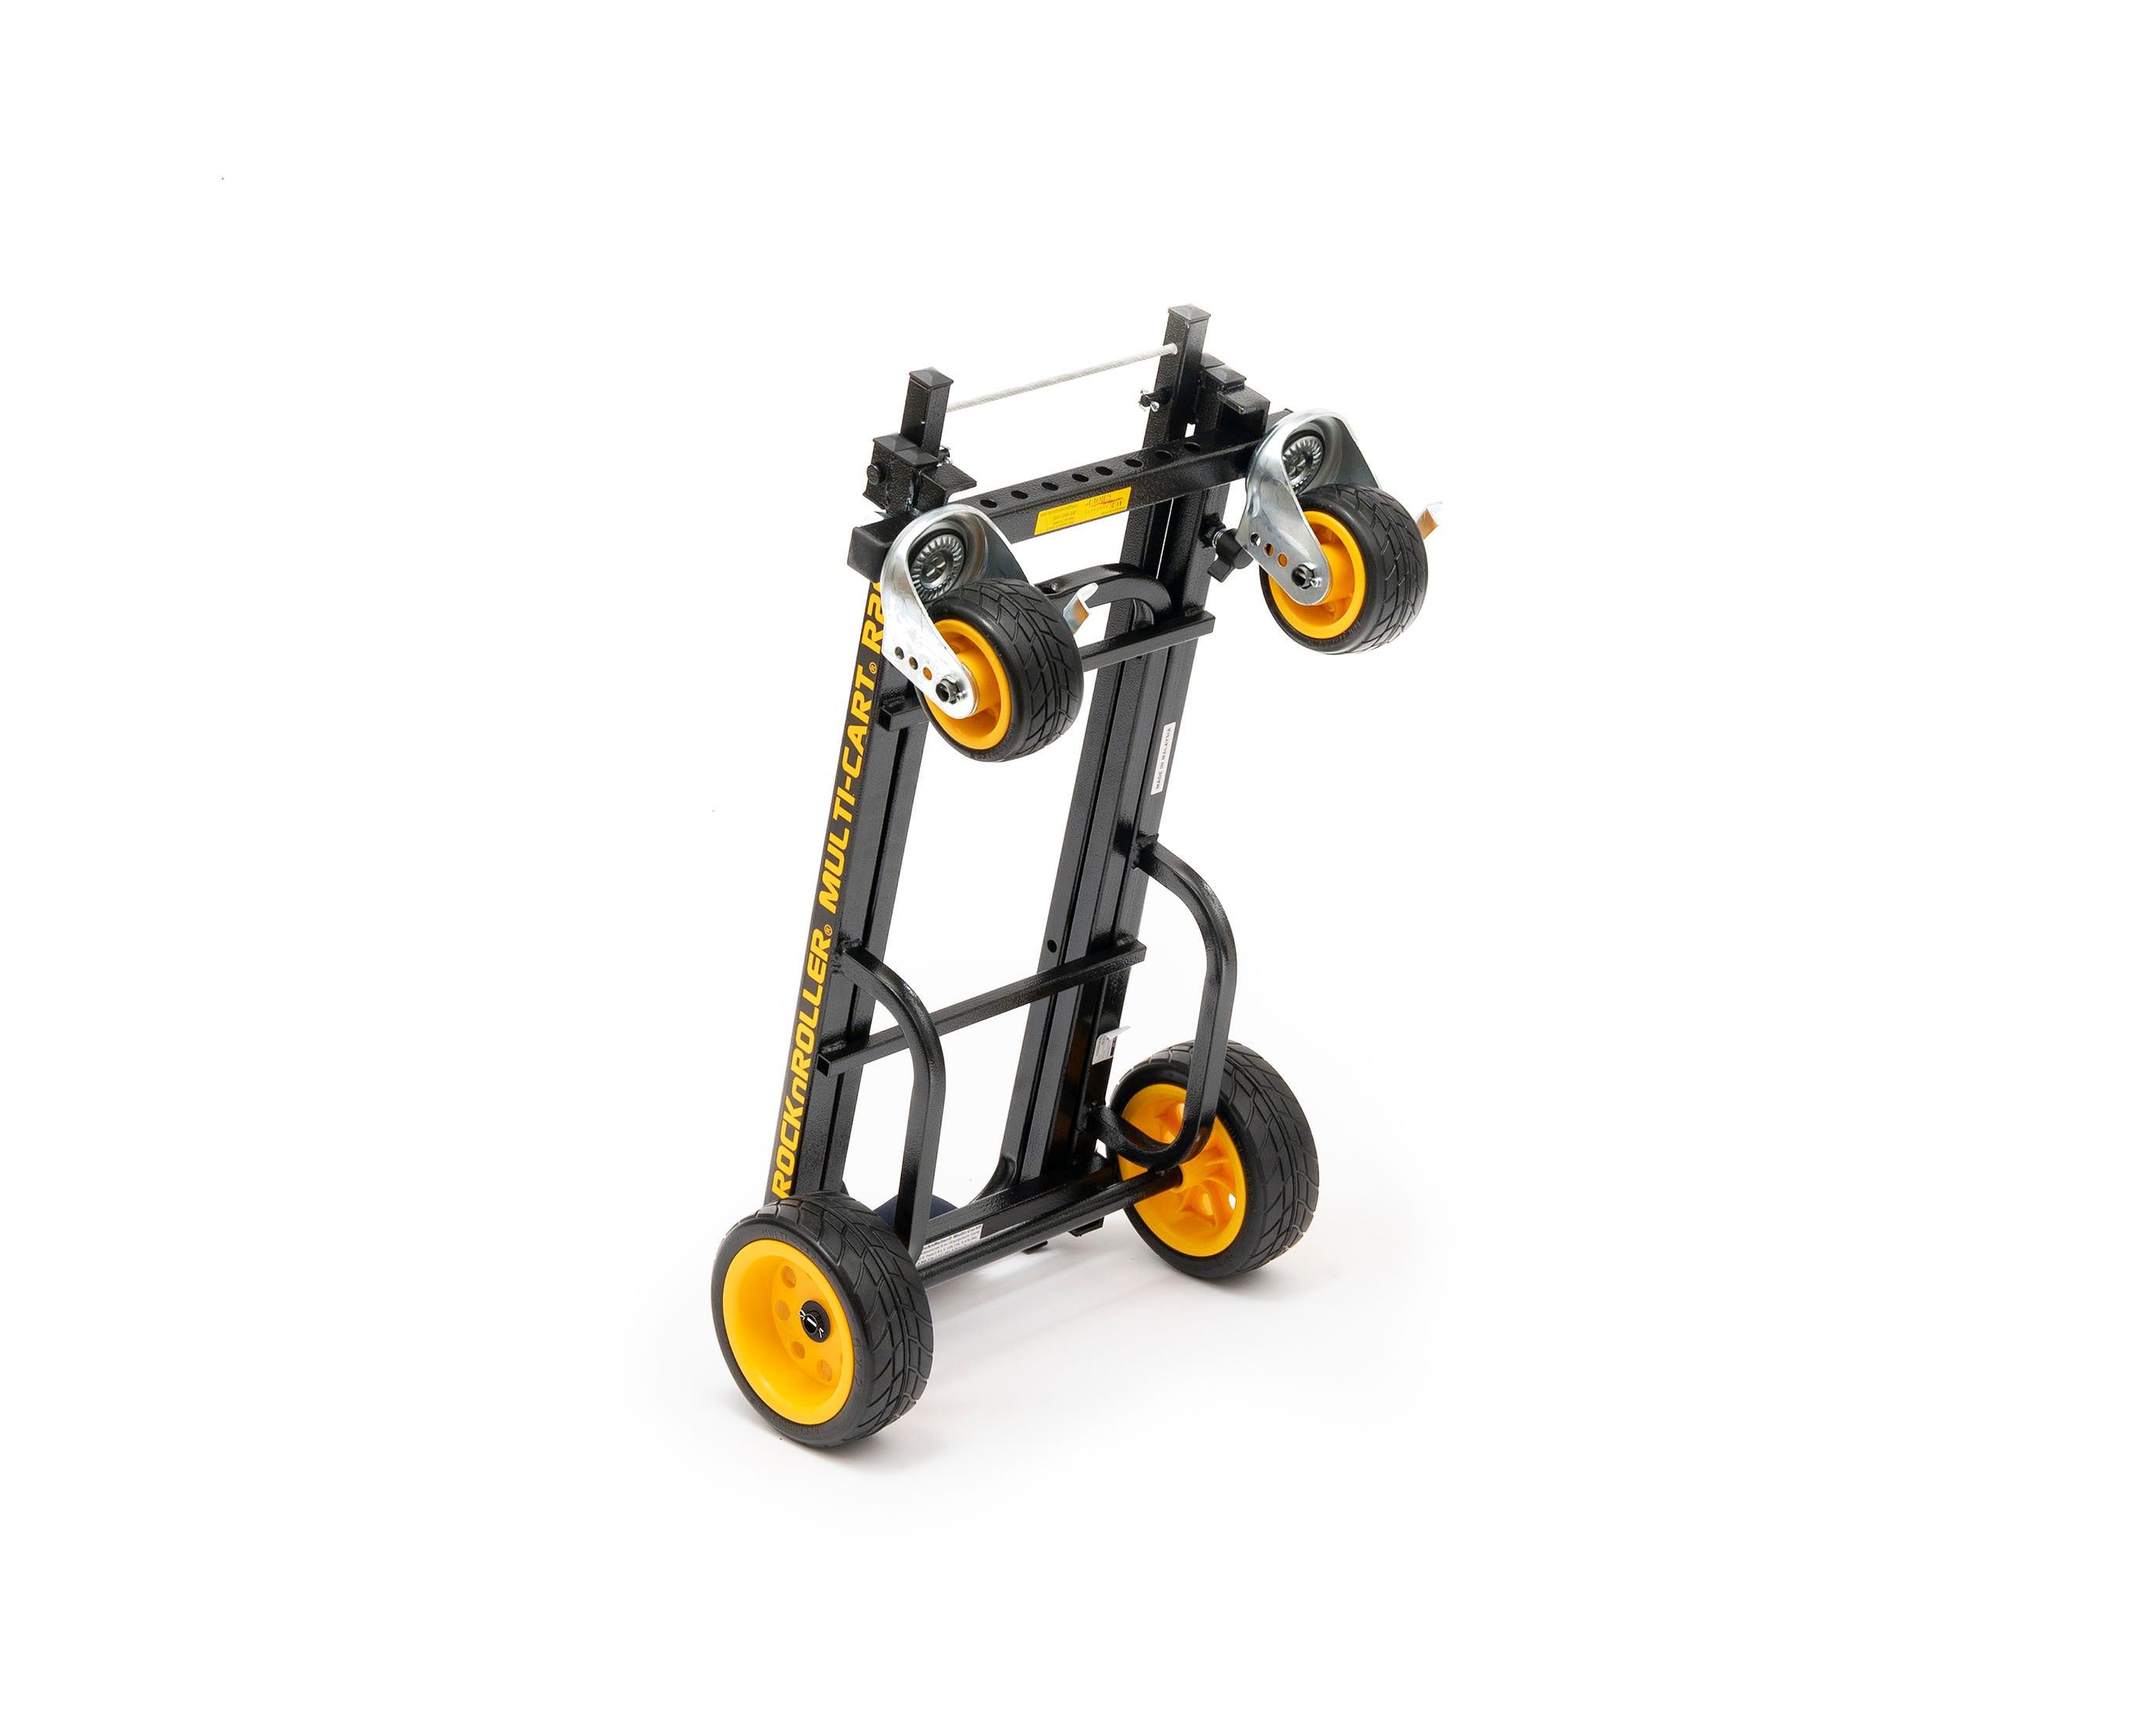 RockNRoller® Multi-Cart® R2G "Micro Glider"